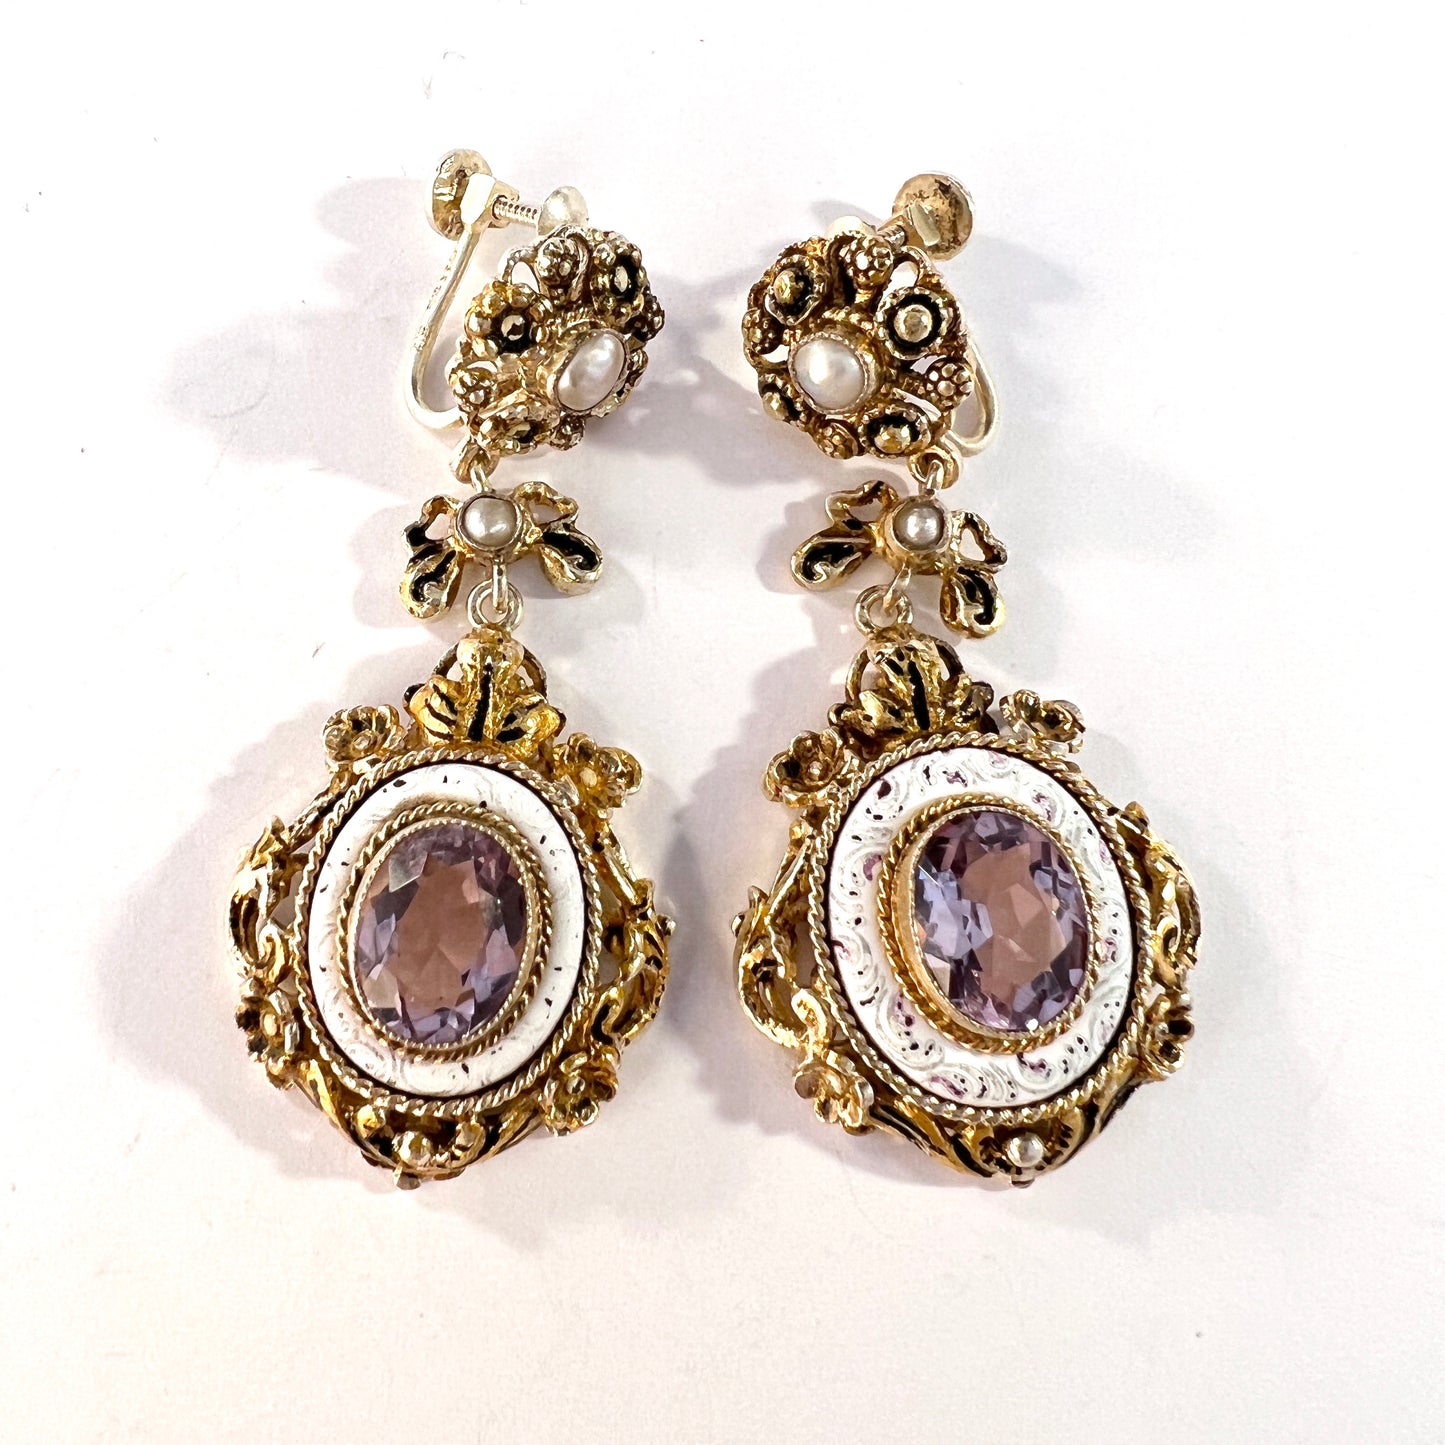 Austria / Hungary early 1900s Sterling Silver Enamel Amethyst Pearl Large Earrings.